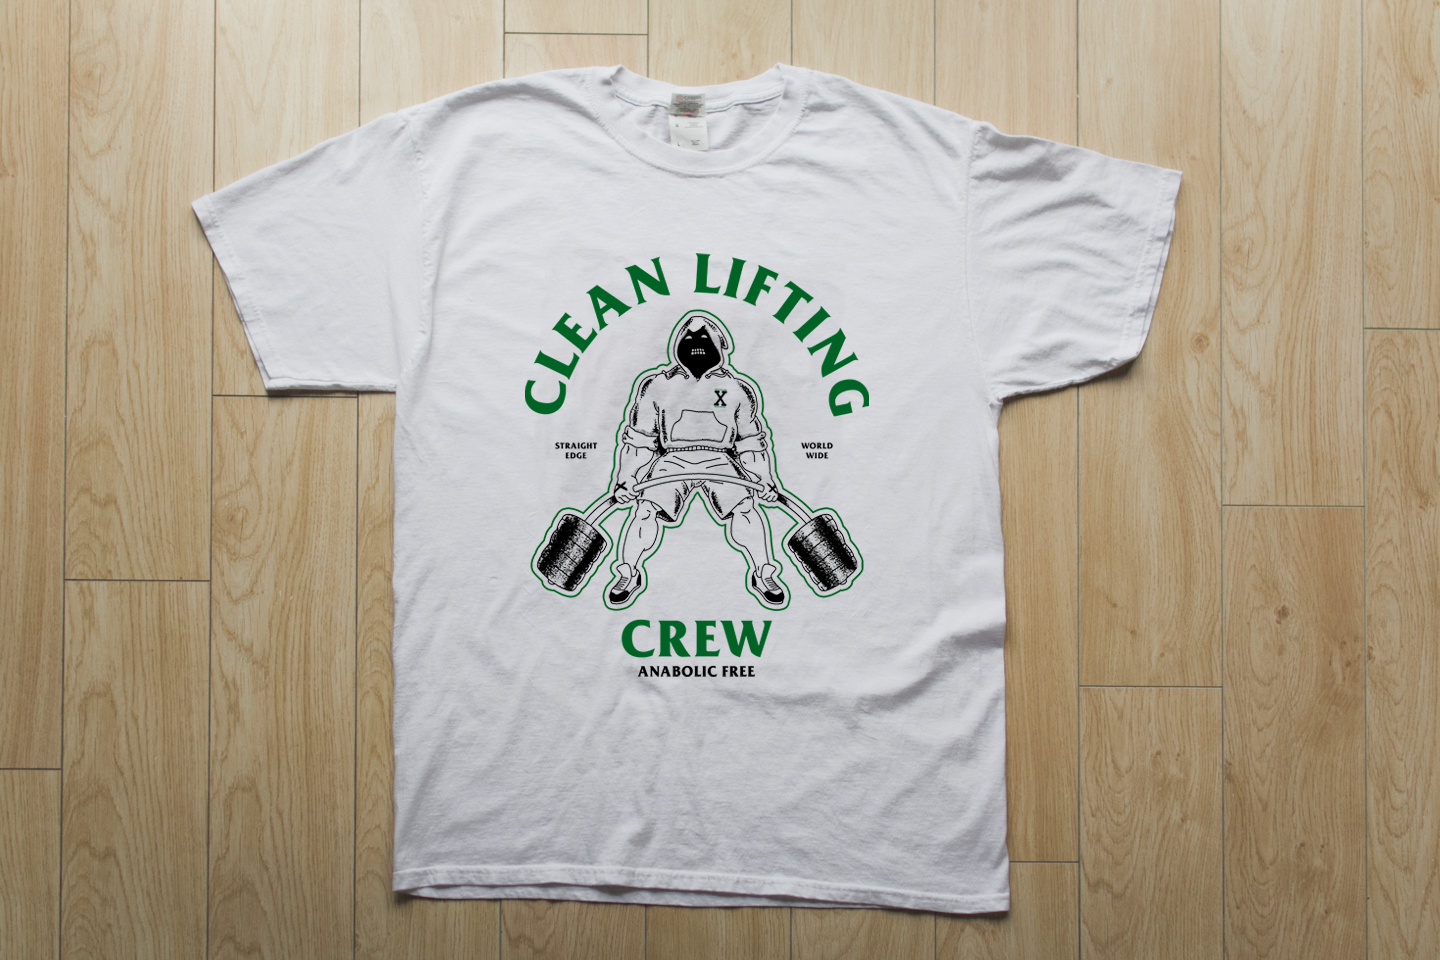 Clean Lifting Crew Anabolic Free Straight Edge Drug Free tshirt by STRAIGHTEDGEWORLDWIDE